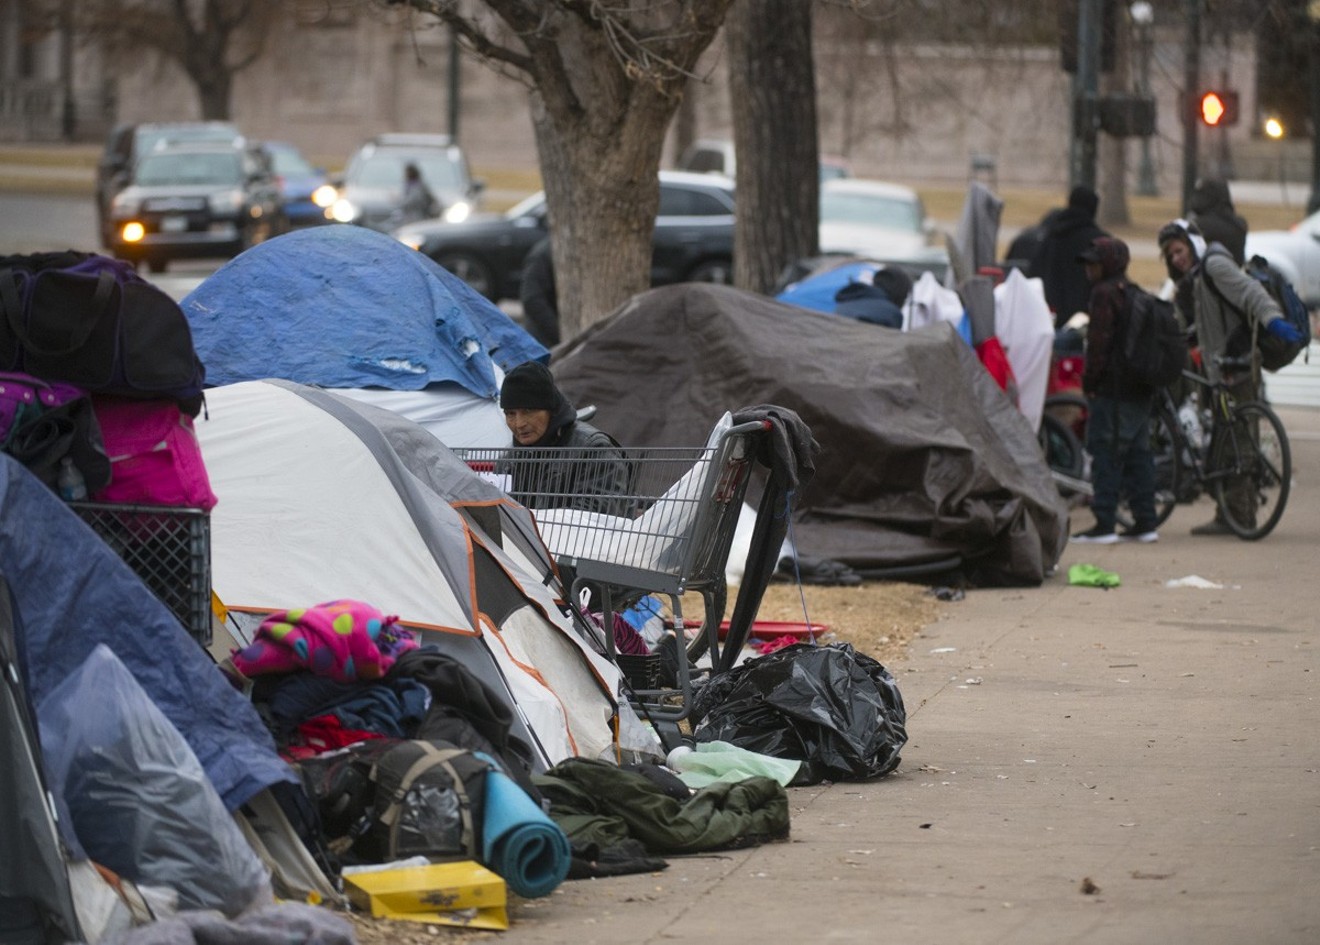 The homeless encampment before the city shut down Liberty Park.